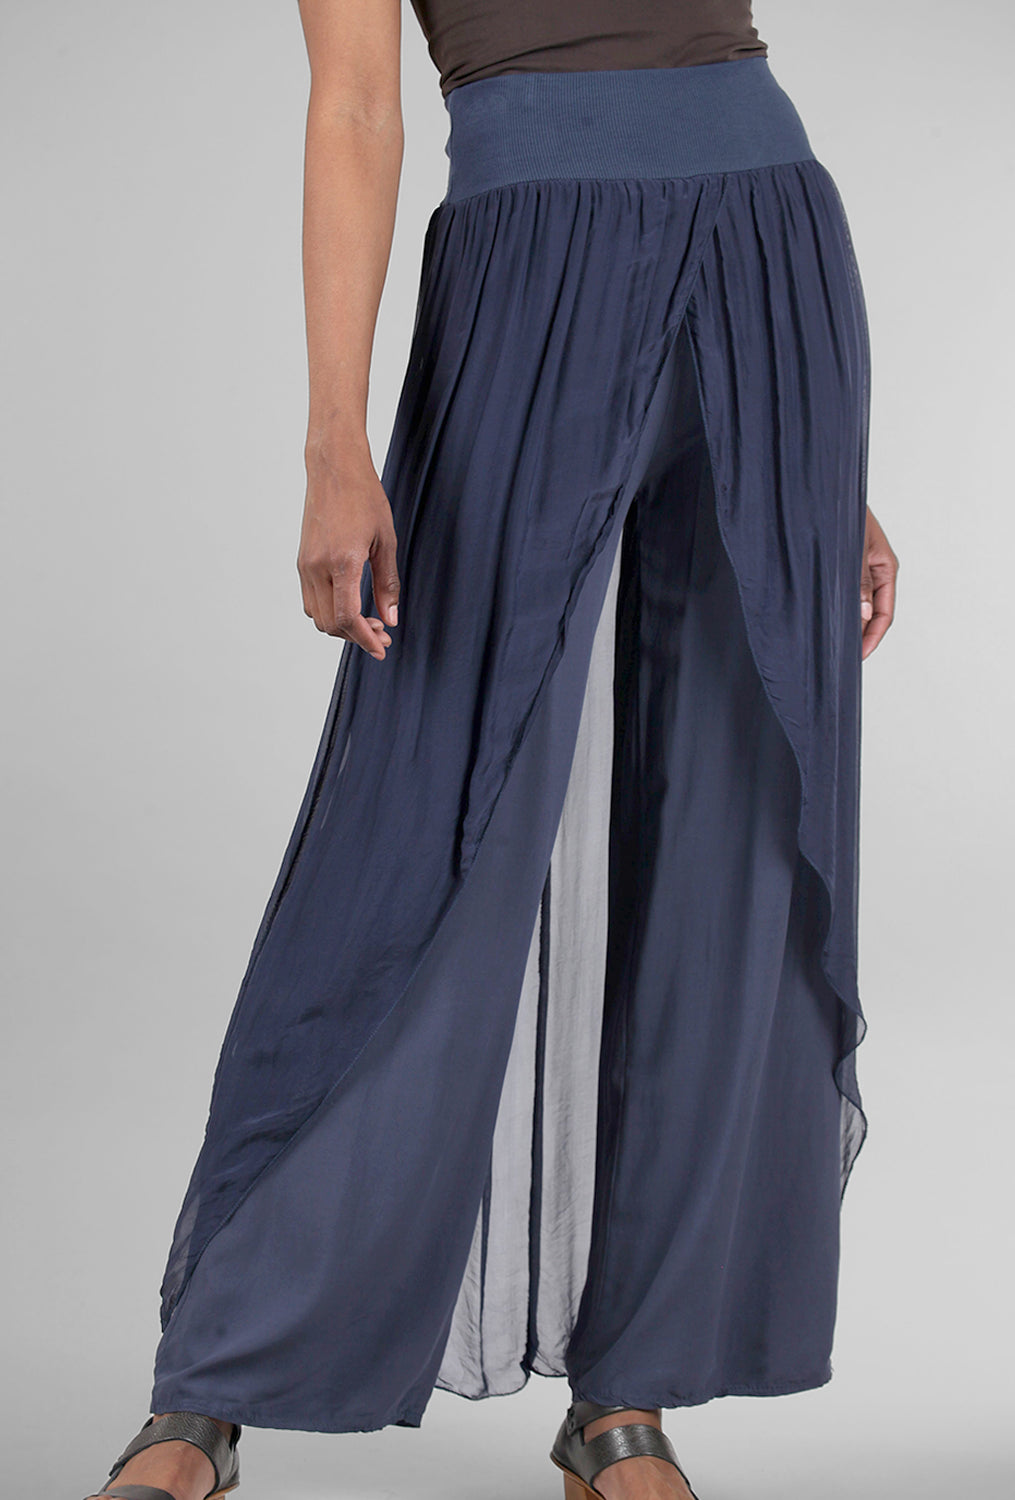 Women` Ruffle Pants Split High Waist Maxi Long Crepe Palazzo Overlay Pant  Skirt(purple)